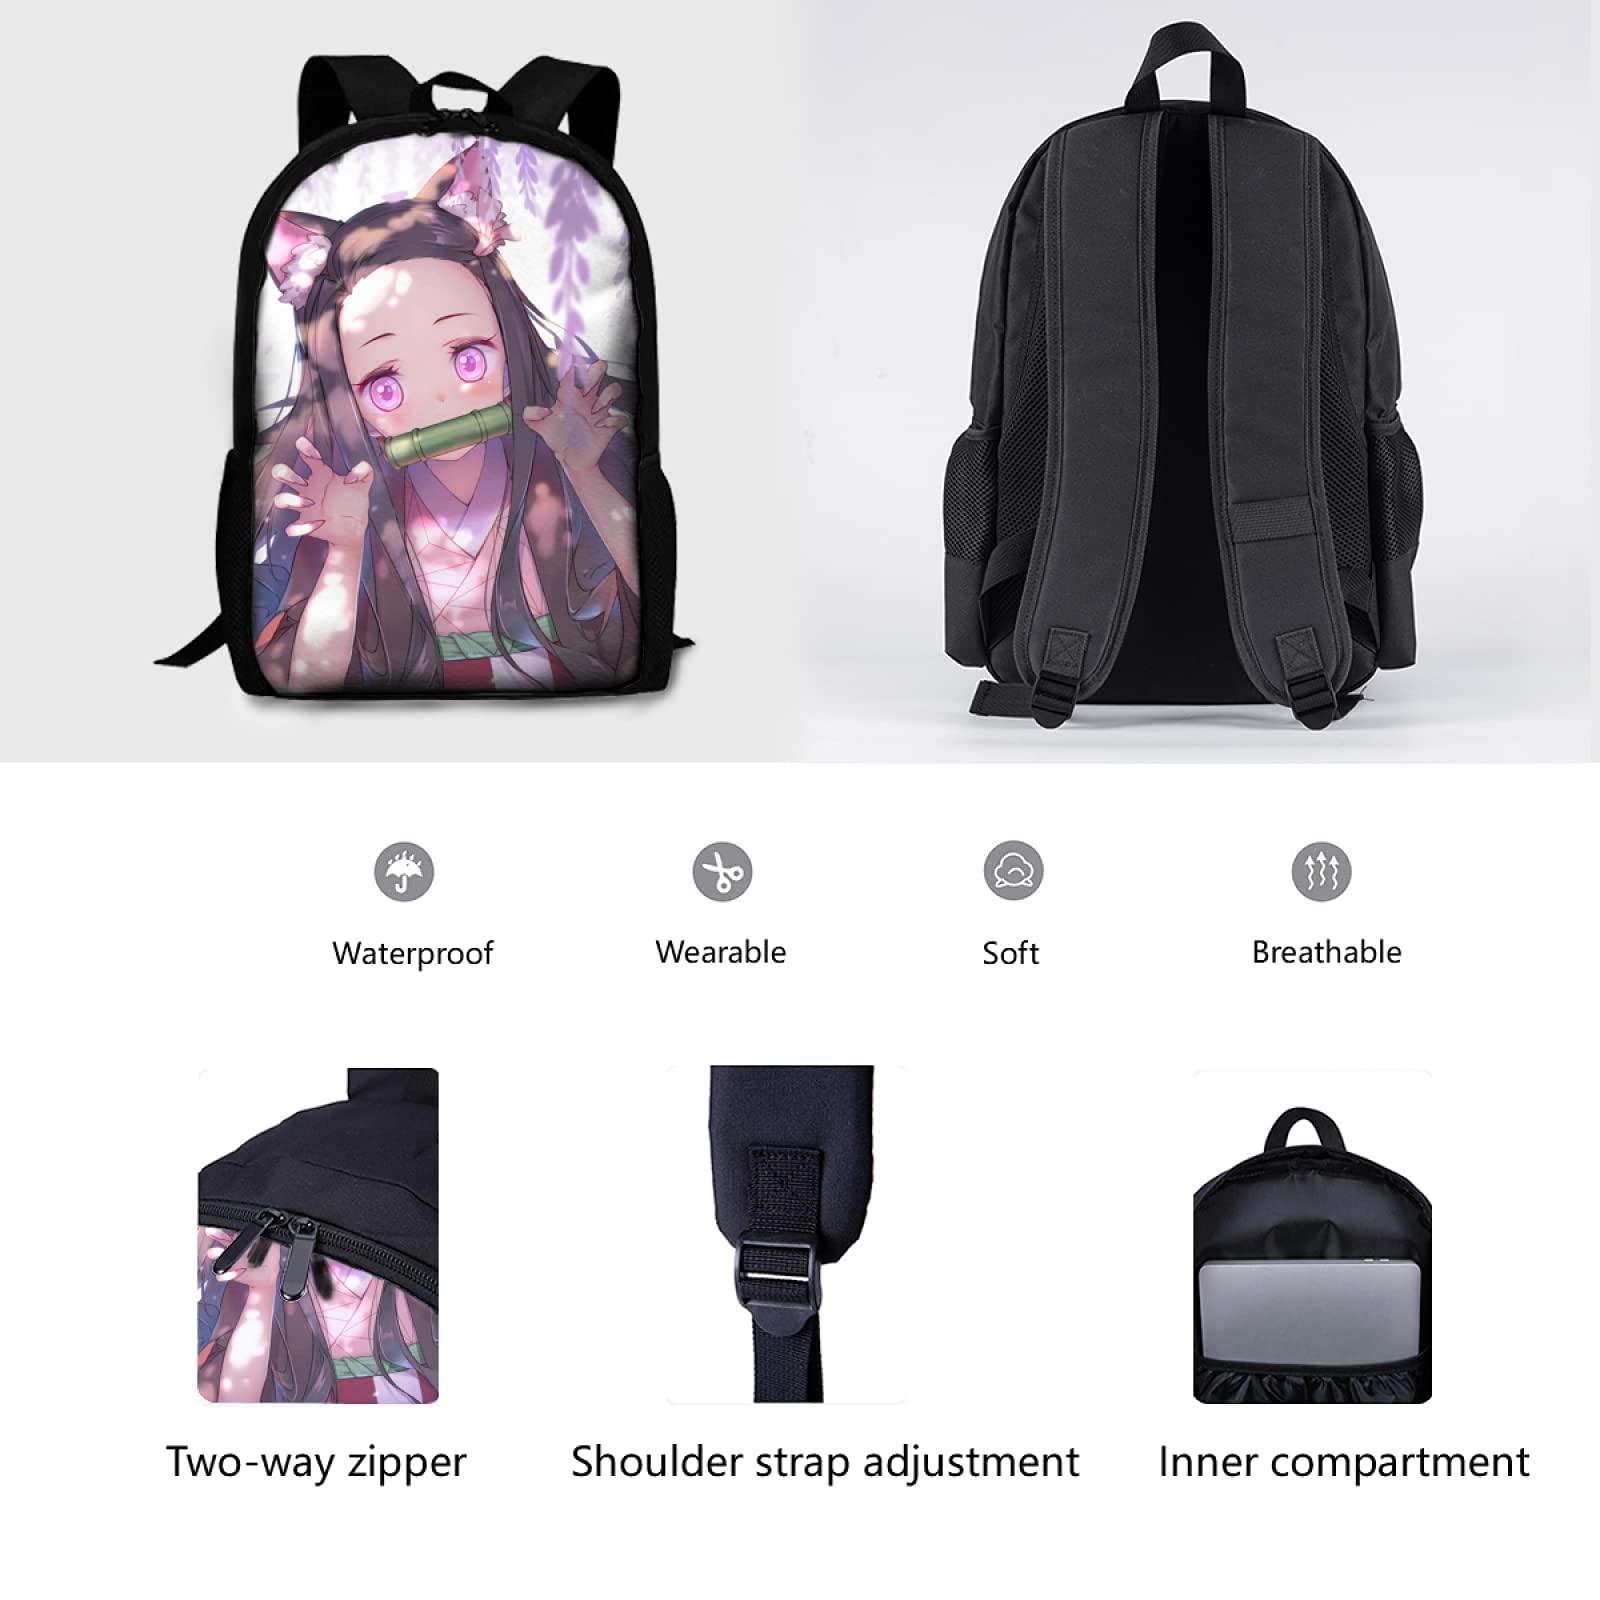 IXUNFOC Anime Cartoon Backpack 17 Inch Girls Backpack Elementary Middle School Laptop Backpack Bookbag for Travel Hiking (A)